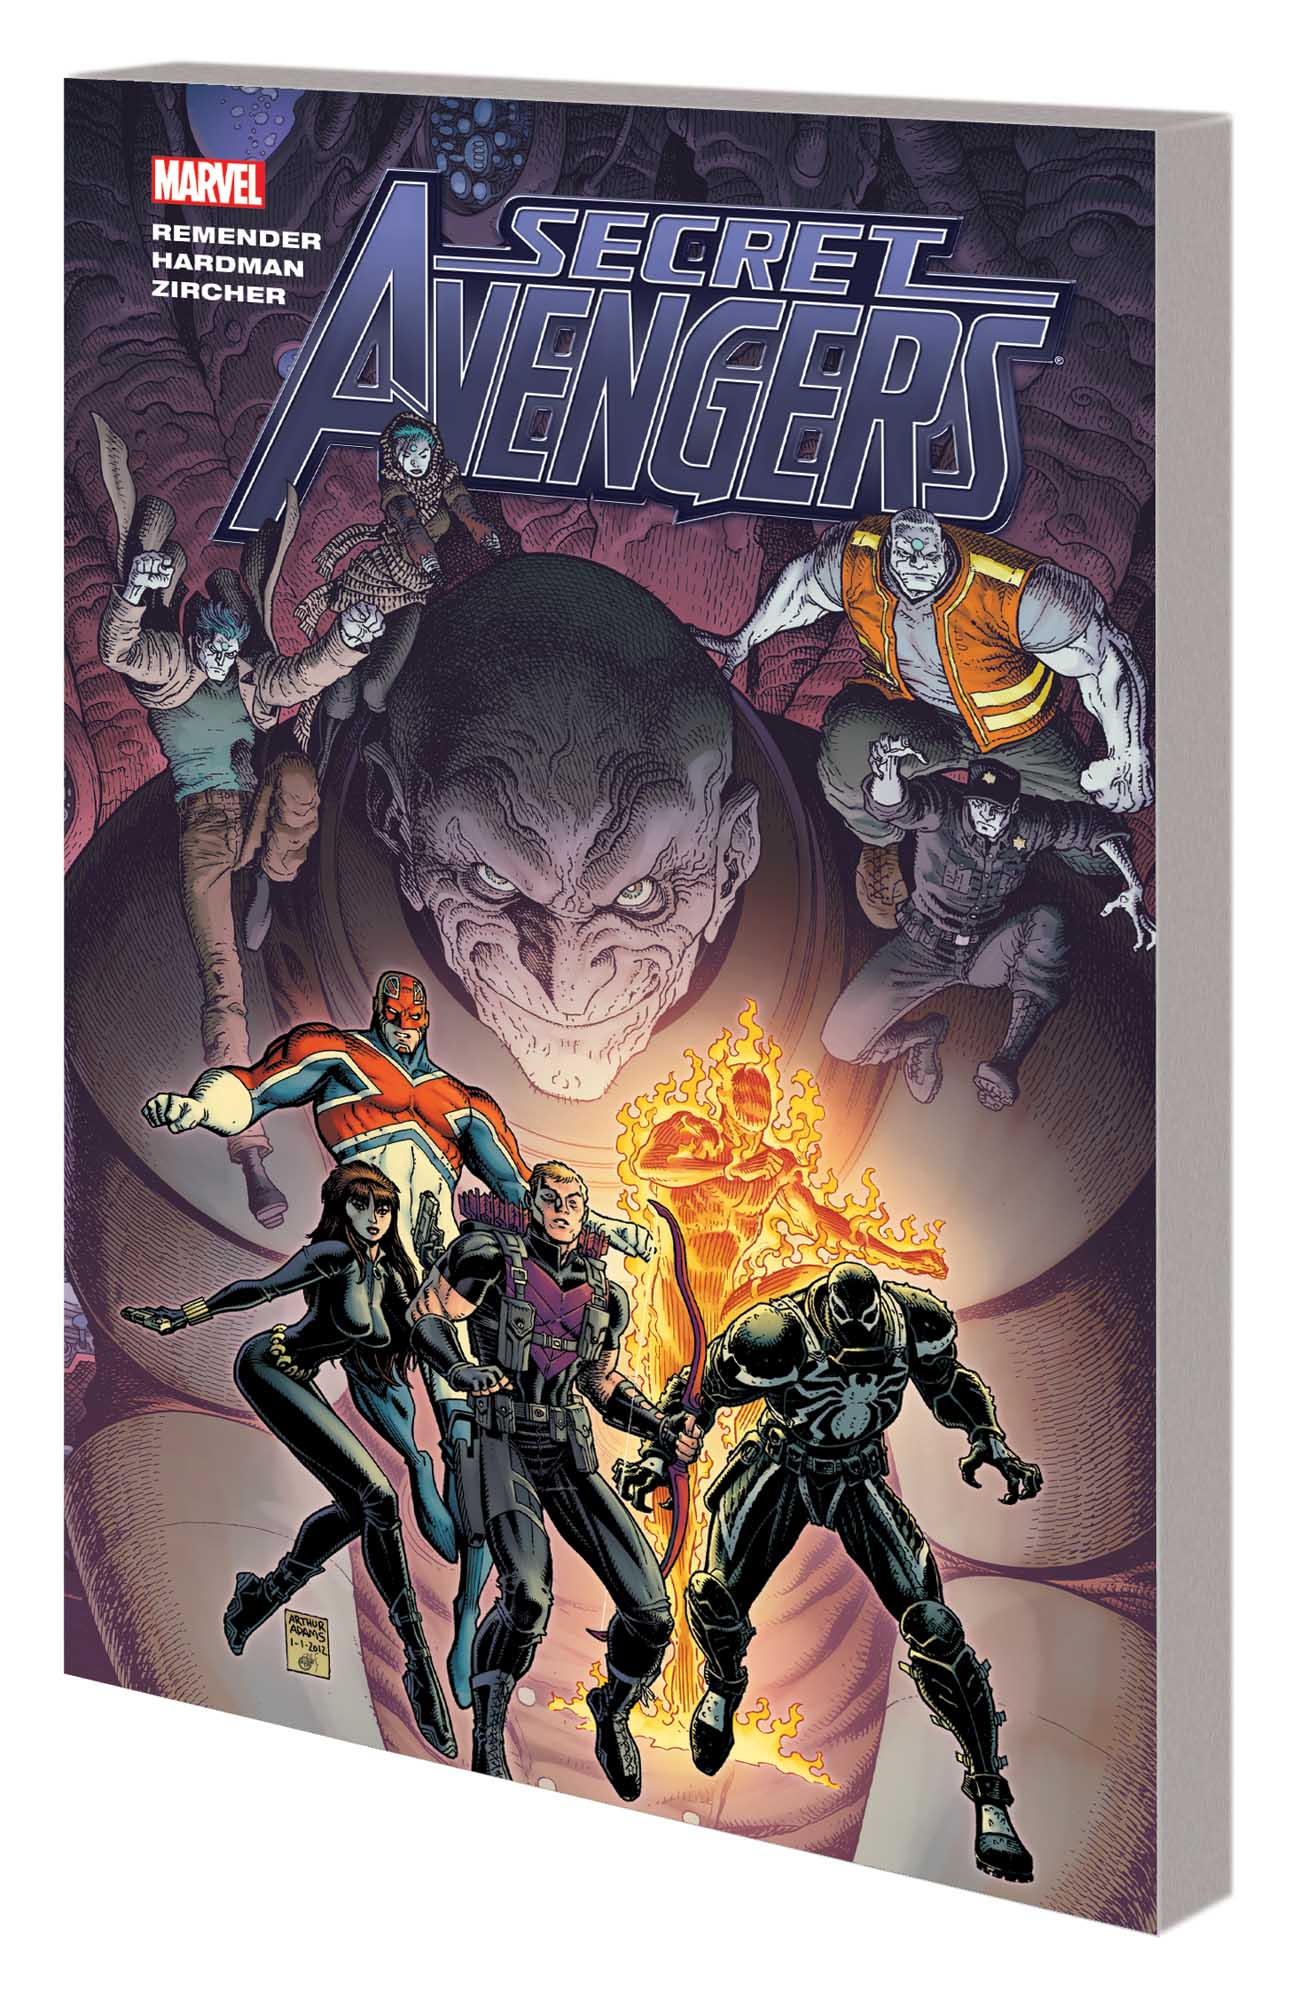 Secret Avengers: (Issues 21-26) (Trade Paperback)